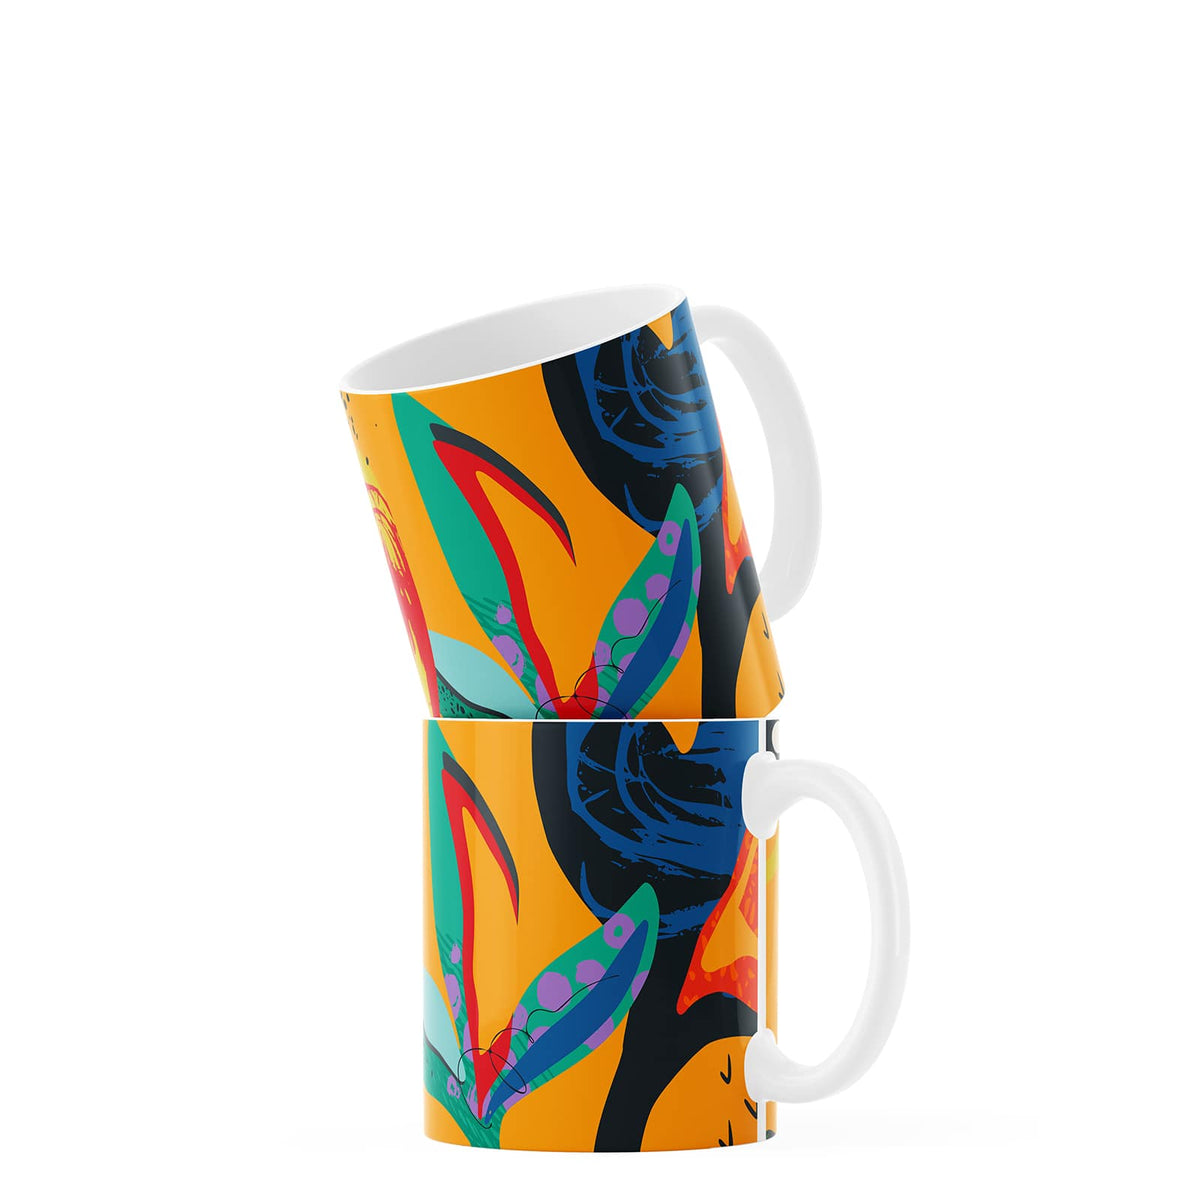 Orange Abstract Coffee Mug